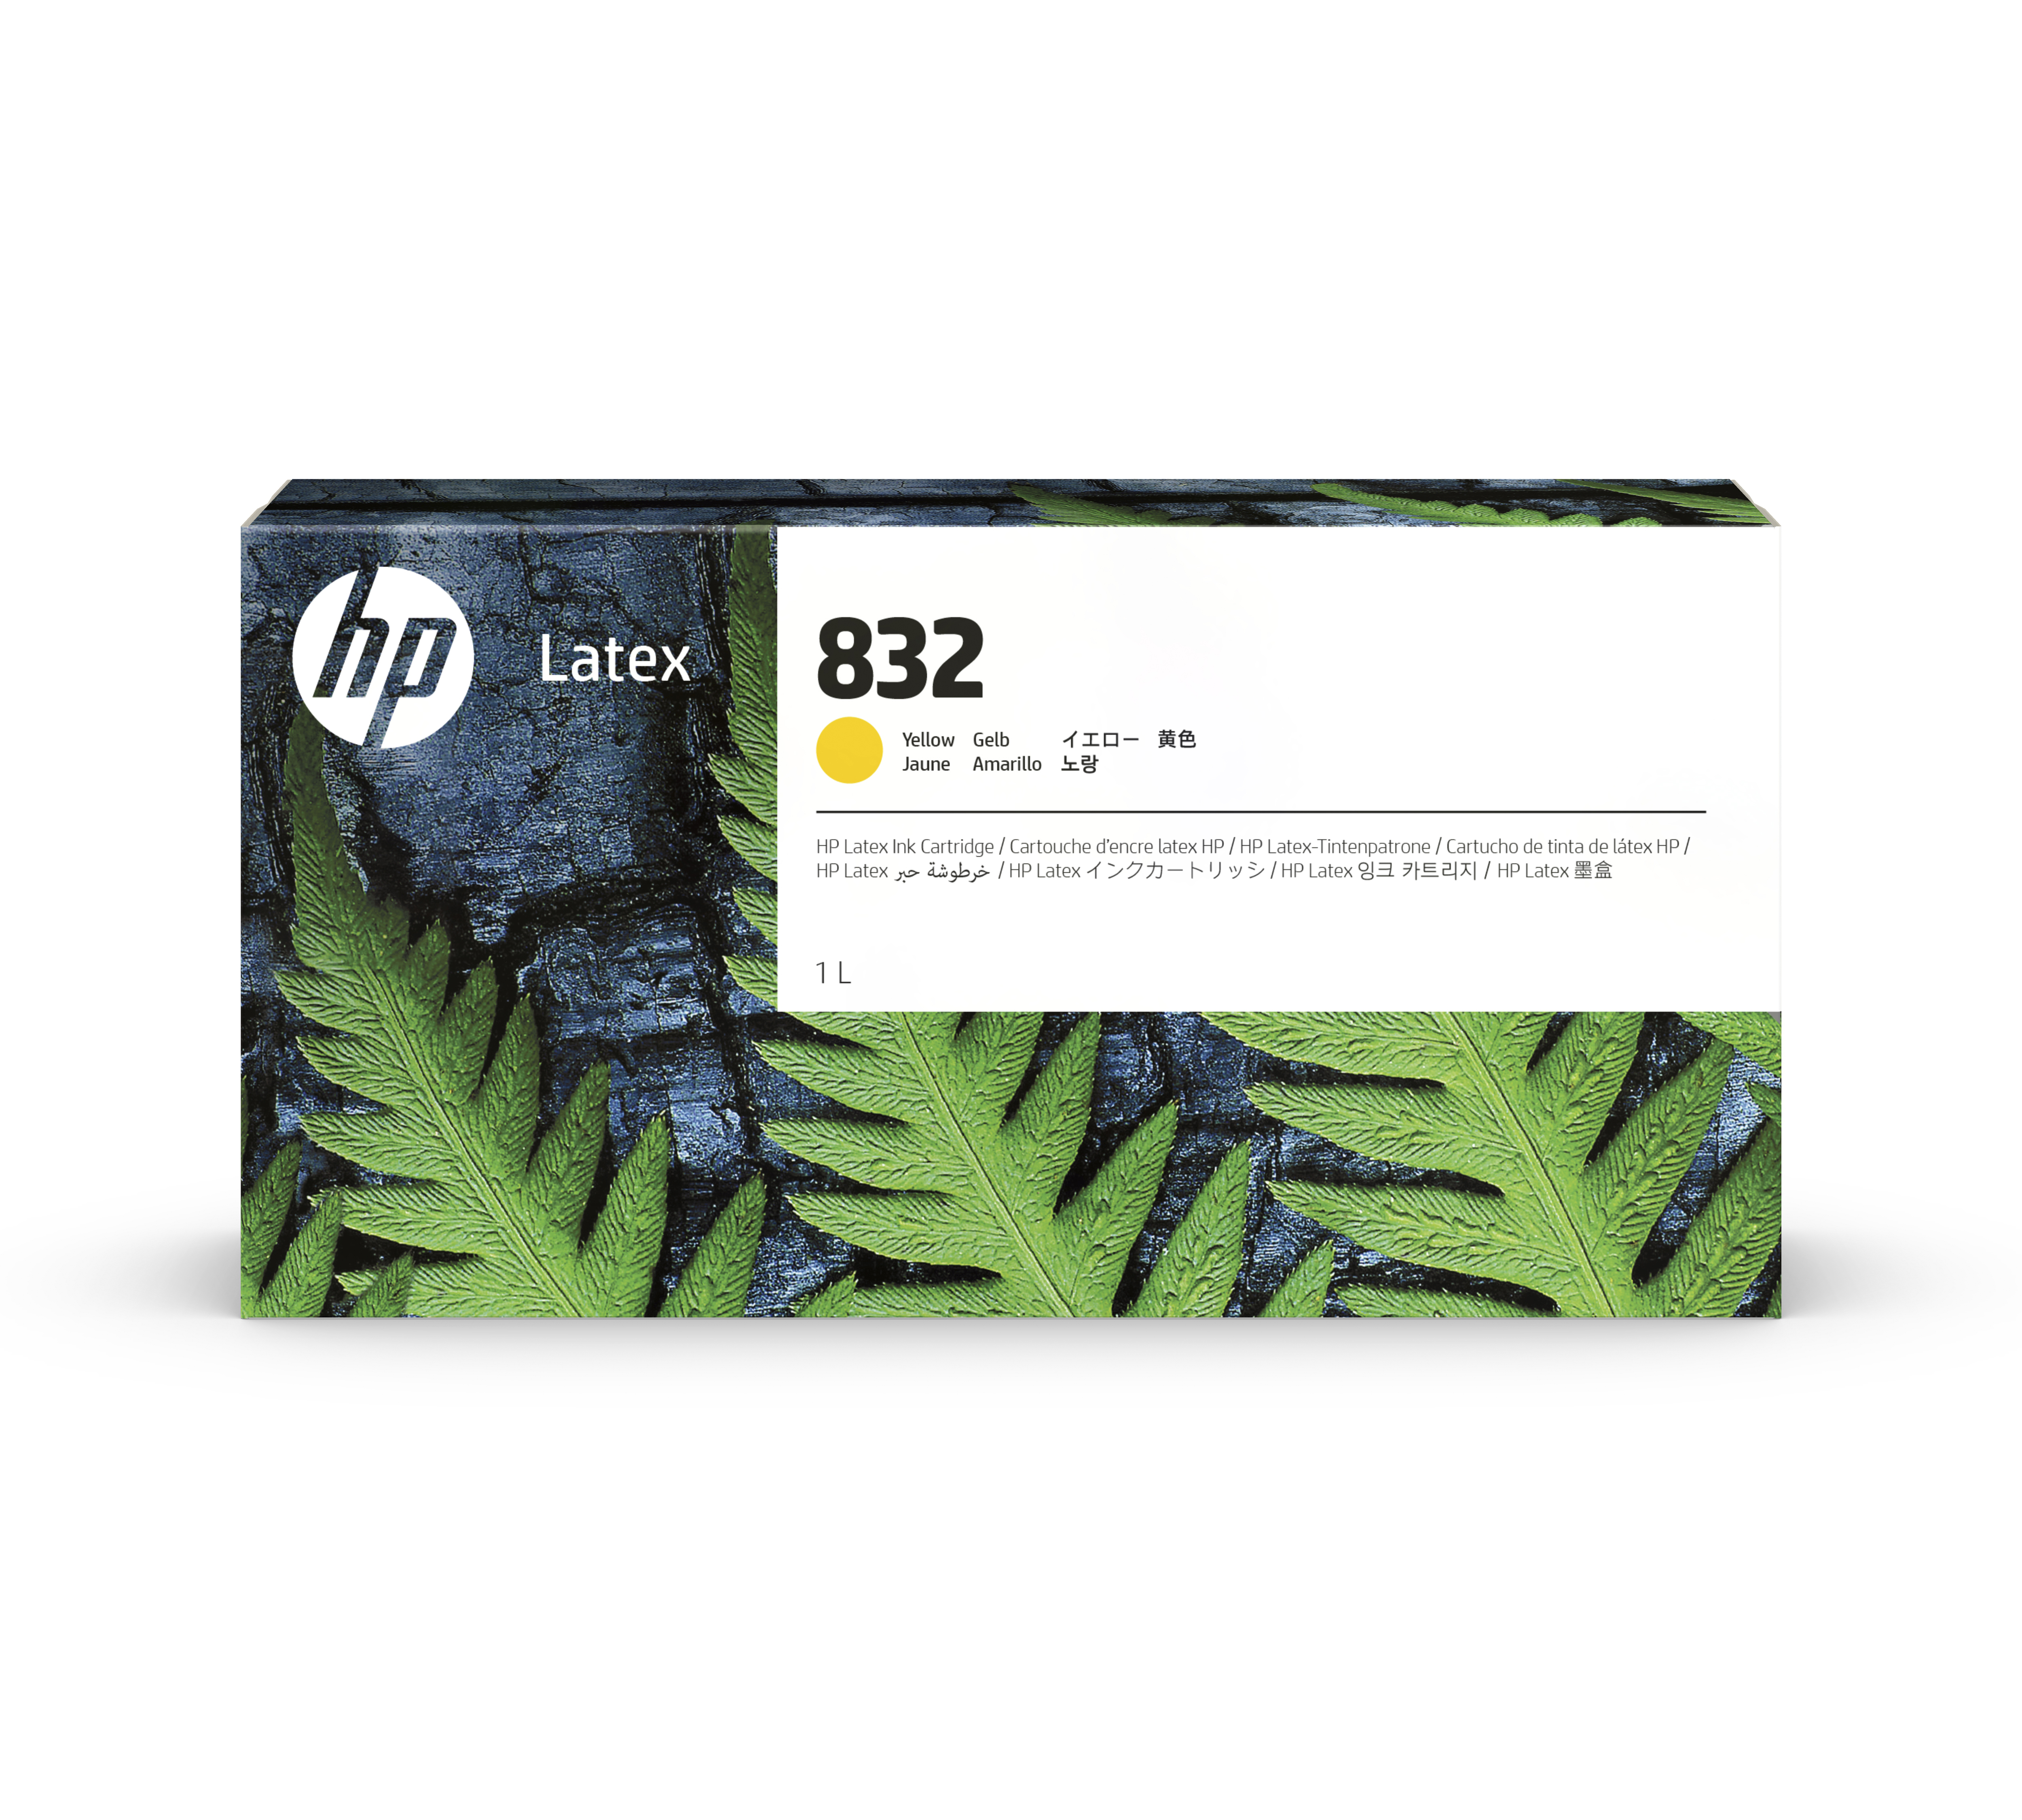 HP 832 Latex Tinte gelb - 1 Liter